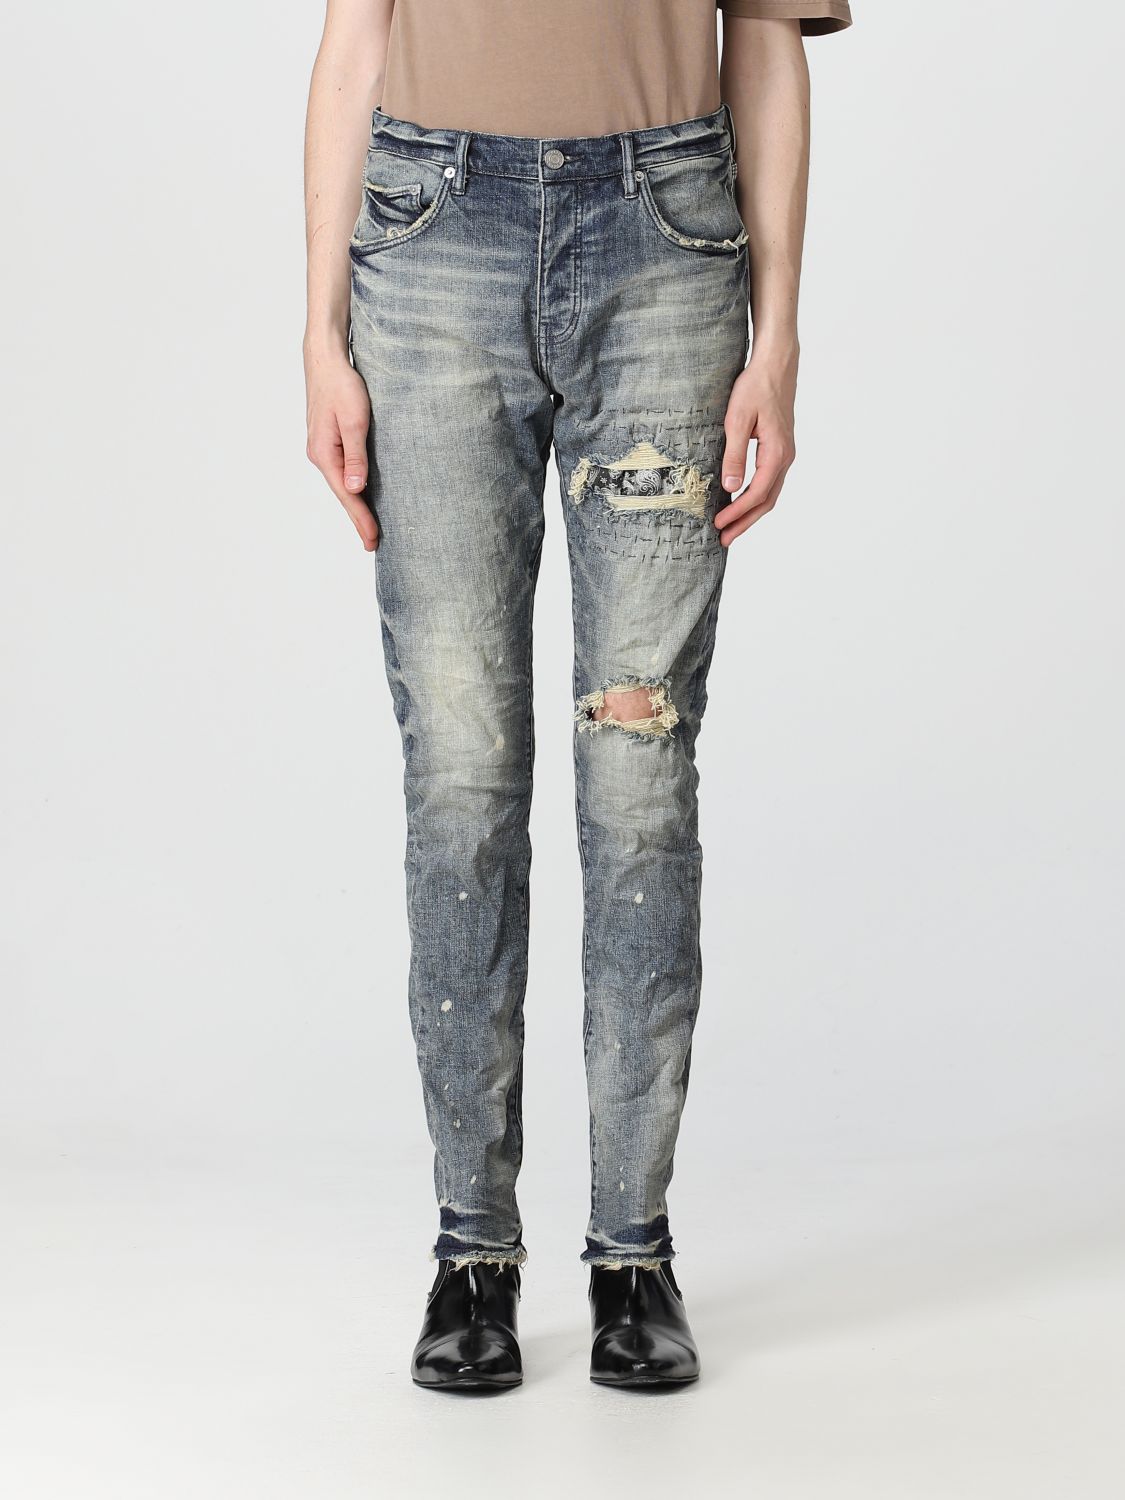 Baffle Leidinggevende Bevoorrecht PURPLE BRAND: jeans for man - Denim | Purple Brand jeans P001BPIN online on  GIGLIO.COM